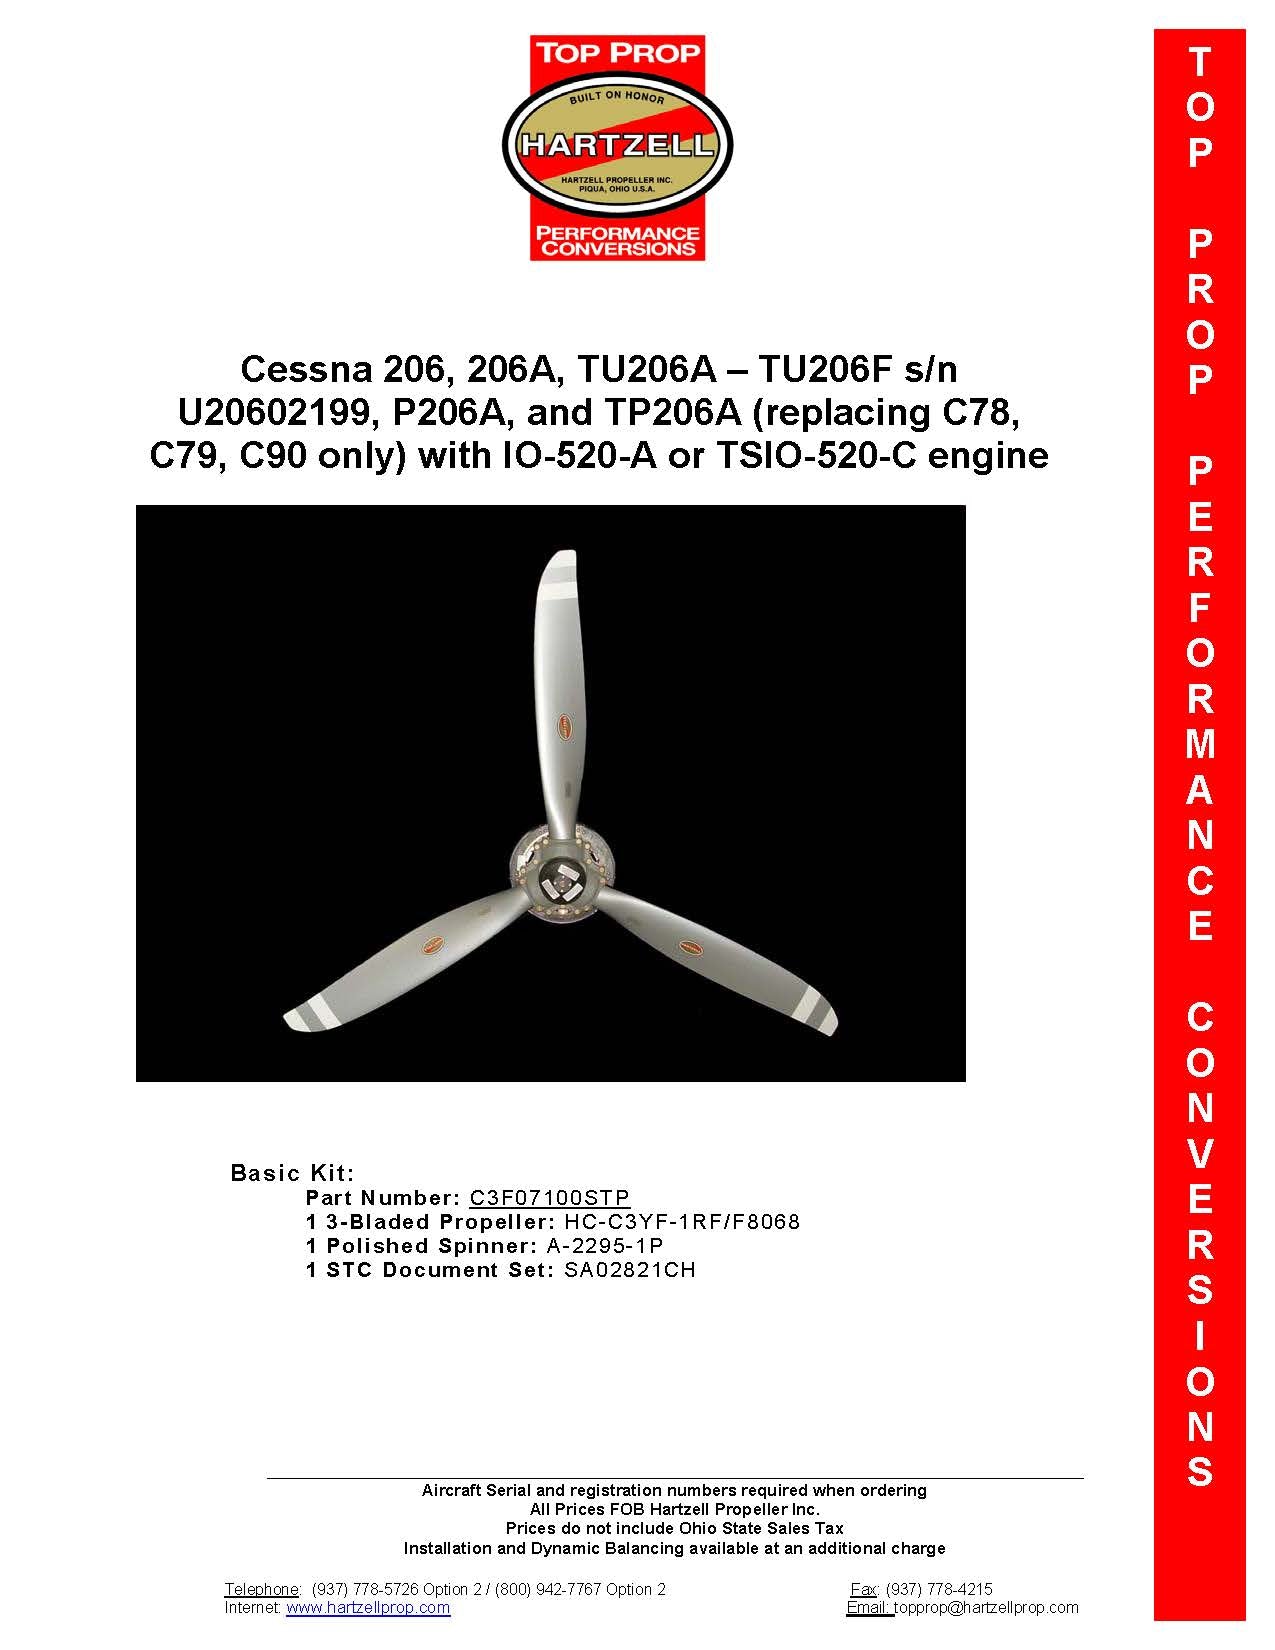 CESSNA-206-C3F07100STP-PAGE-1